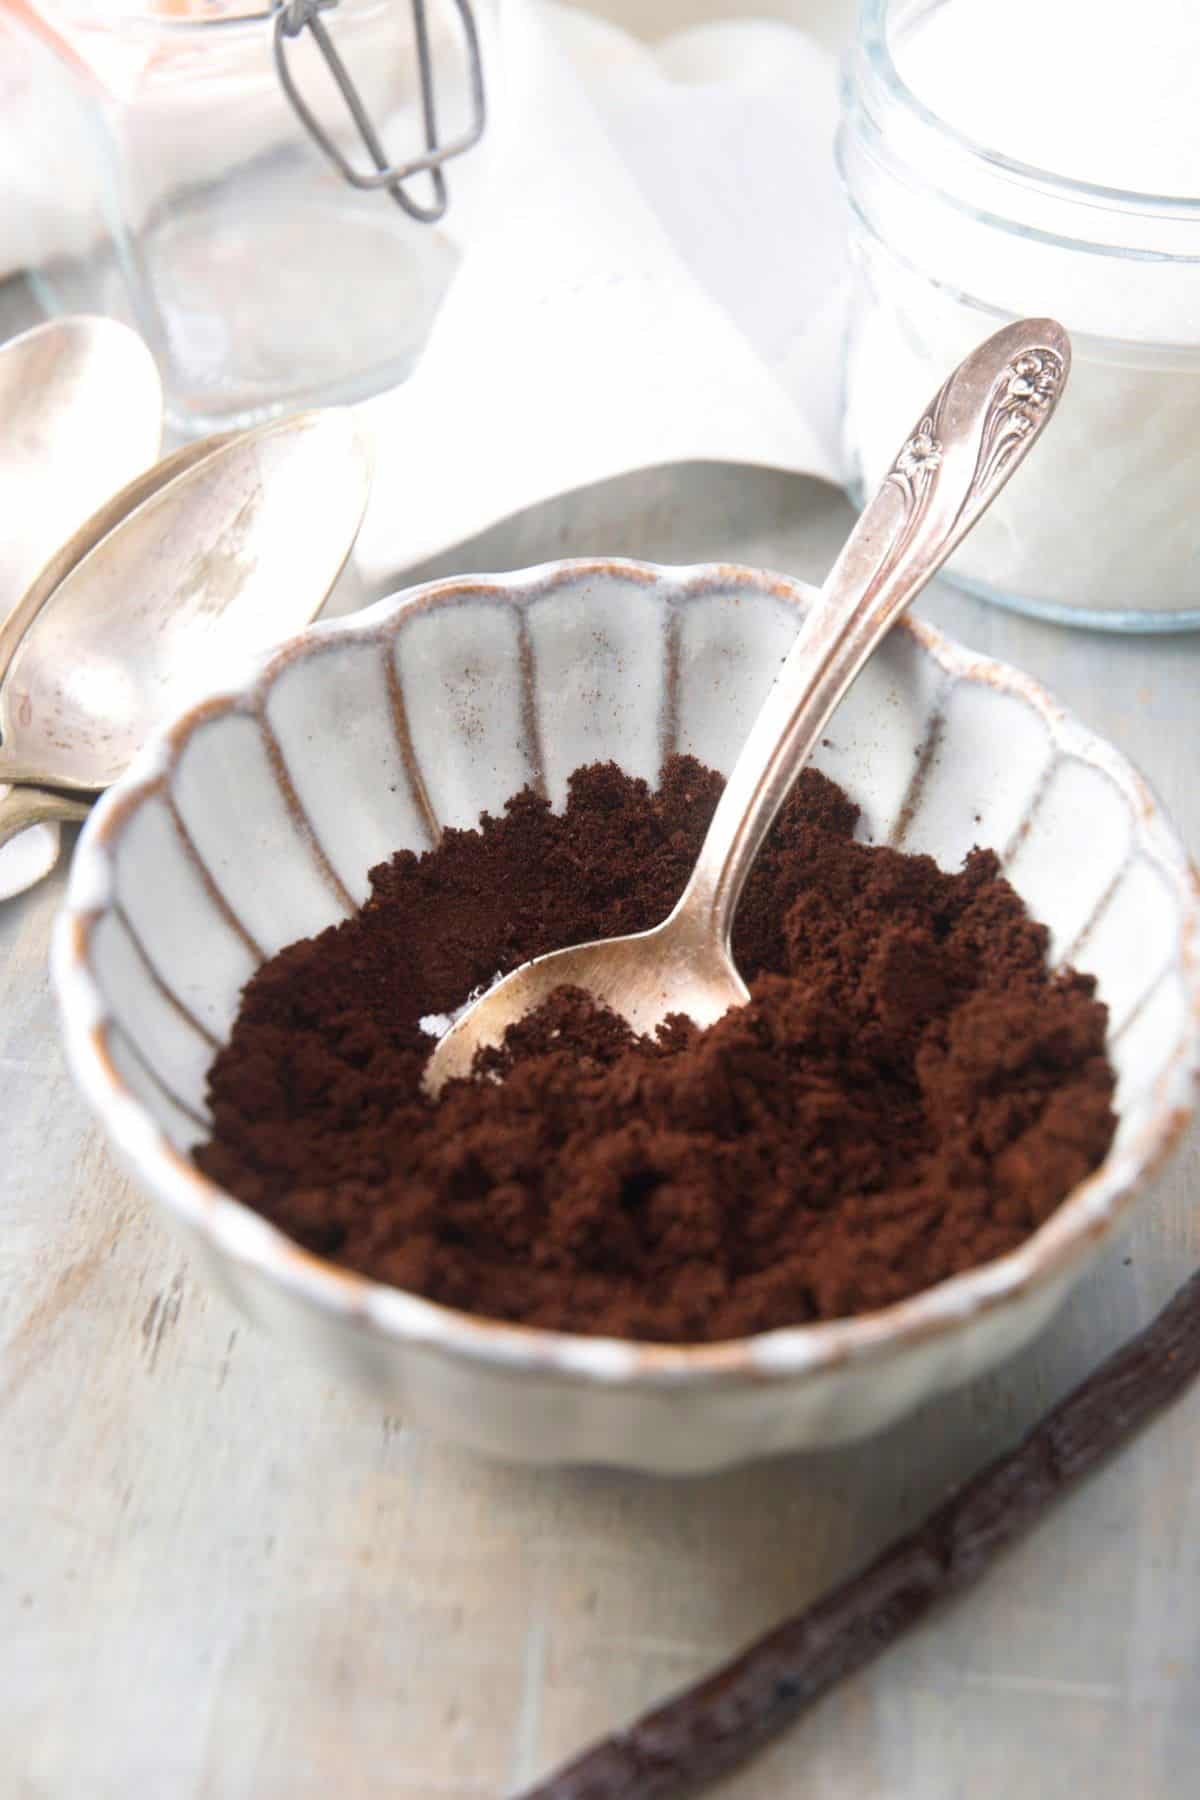 Vanilla bean powder in bowl with spoon.